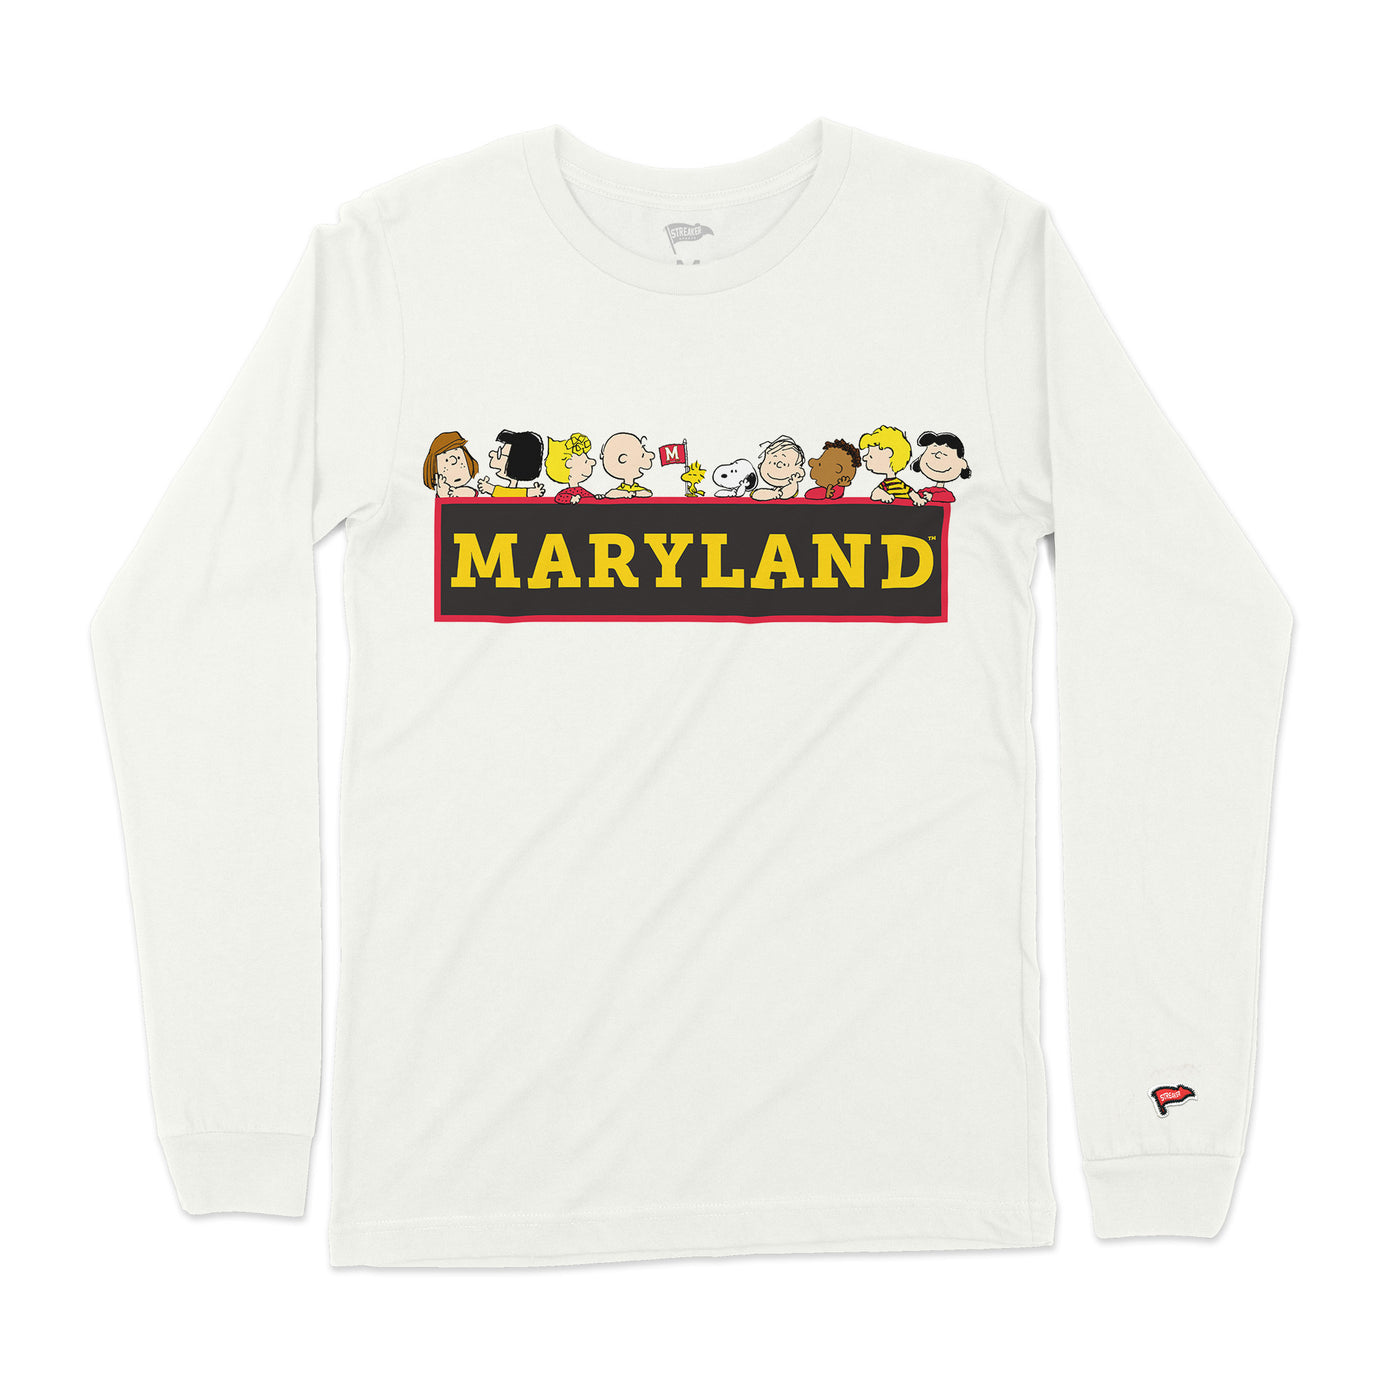 Peanuts x Maryland The Gang Long Sleeve - Streaker Sports